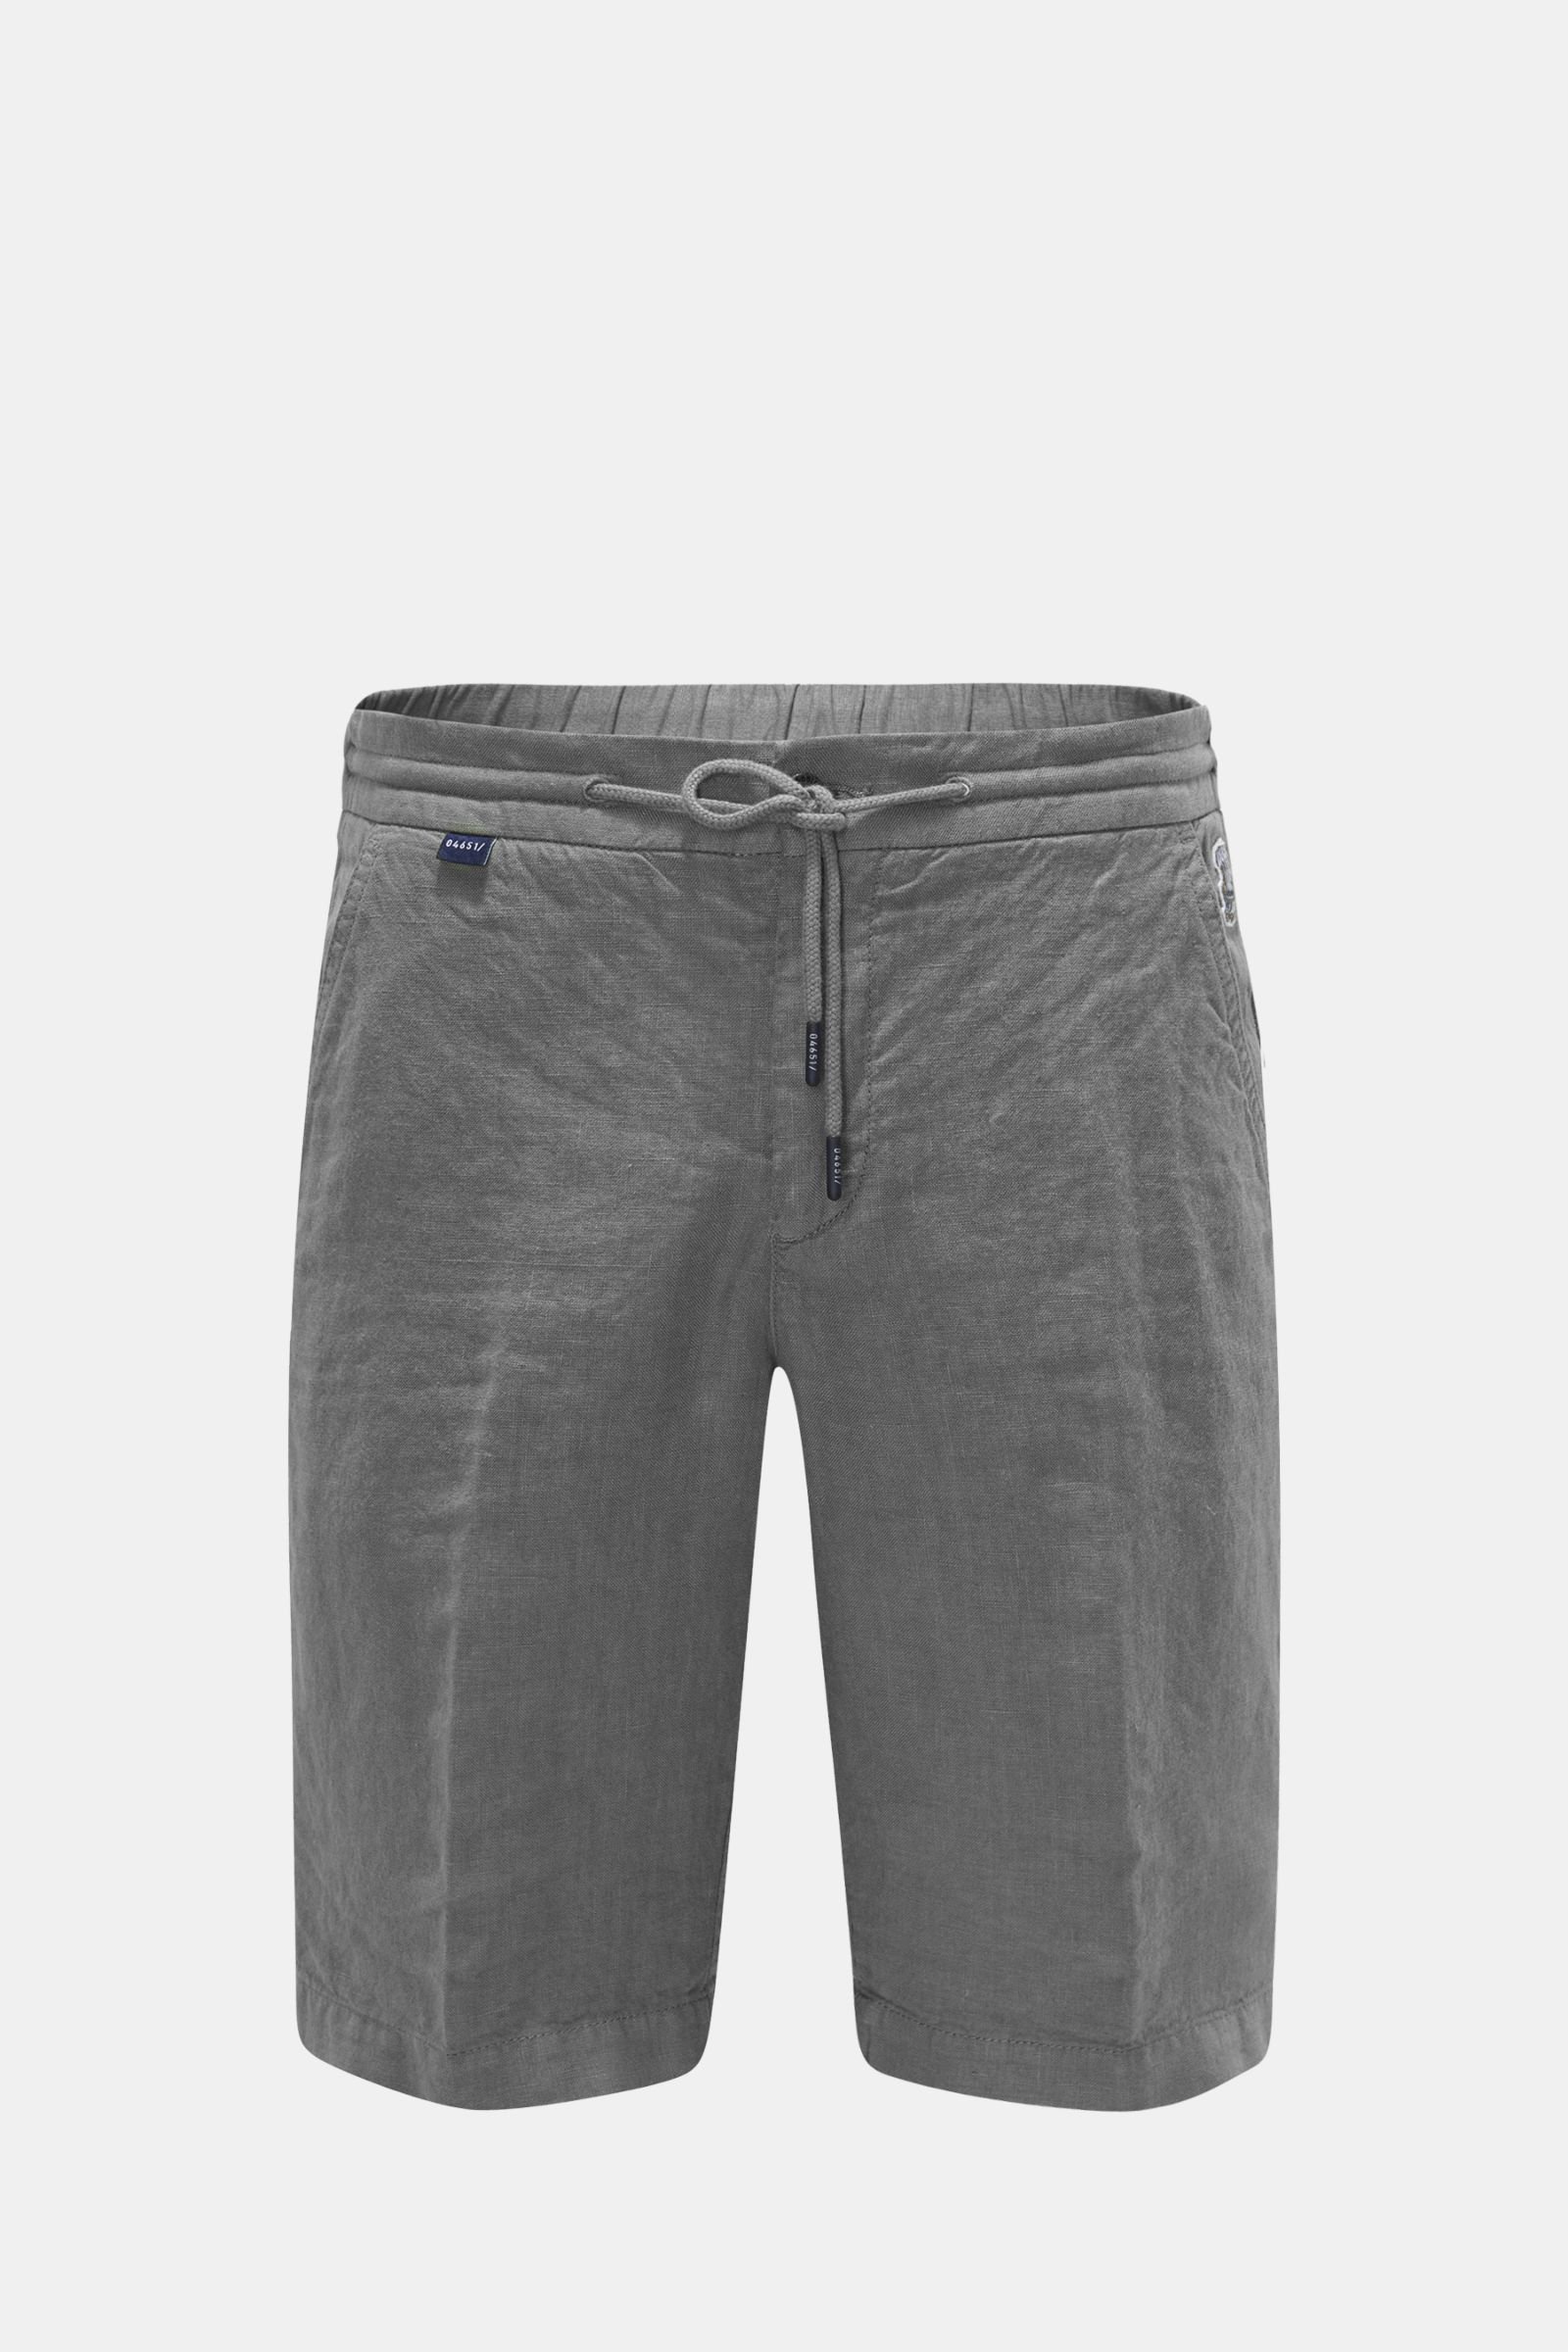 Linen Bermuda shorts grey